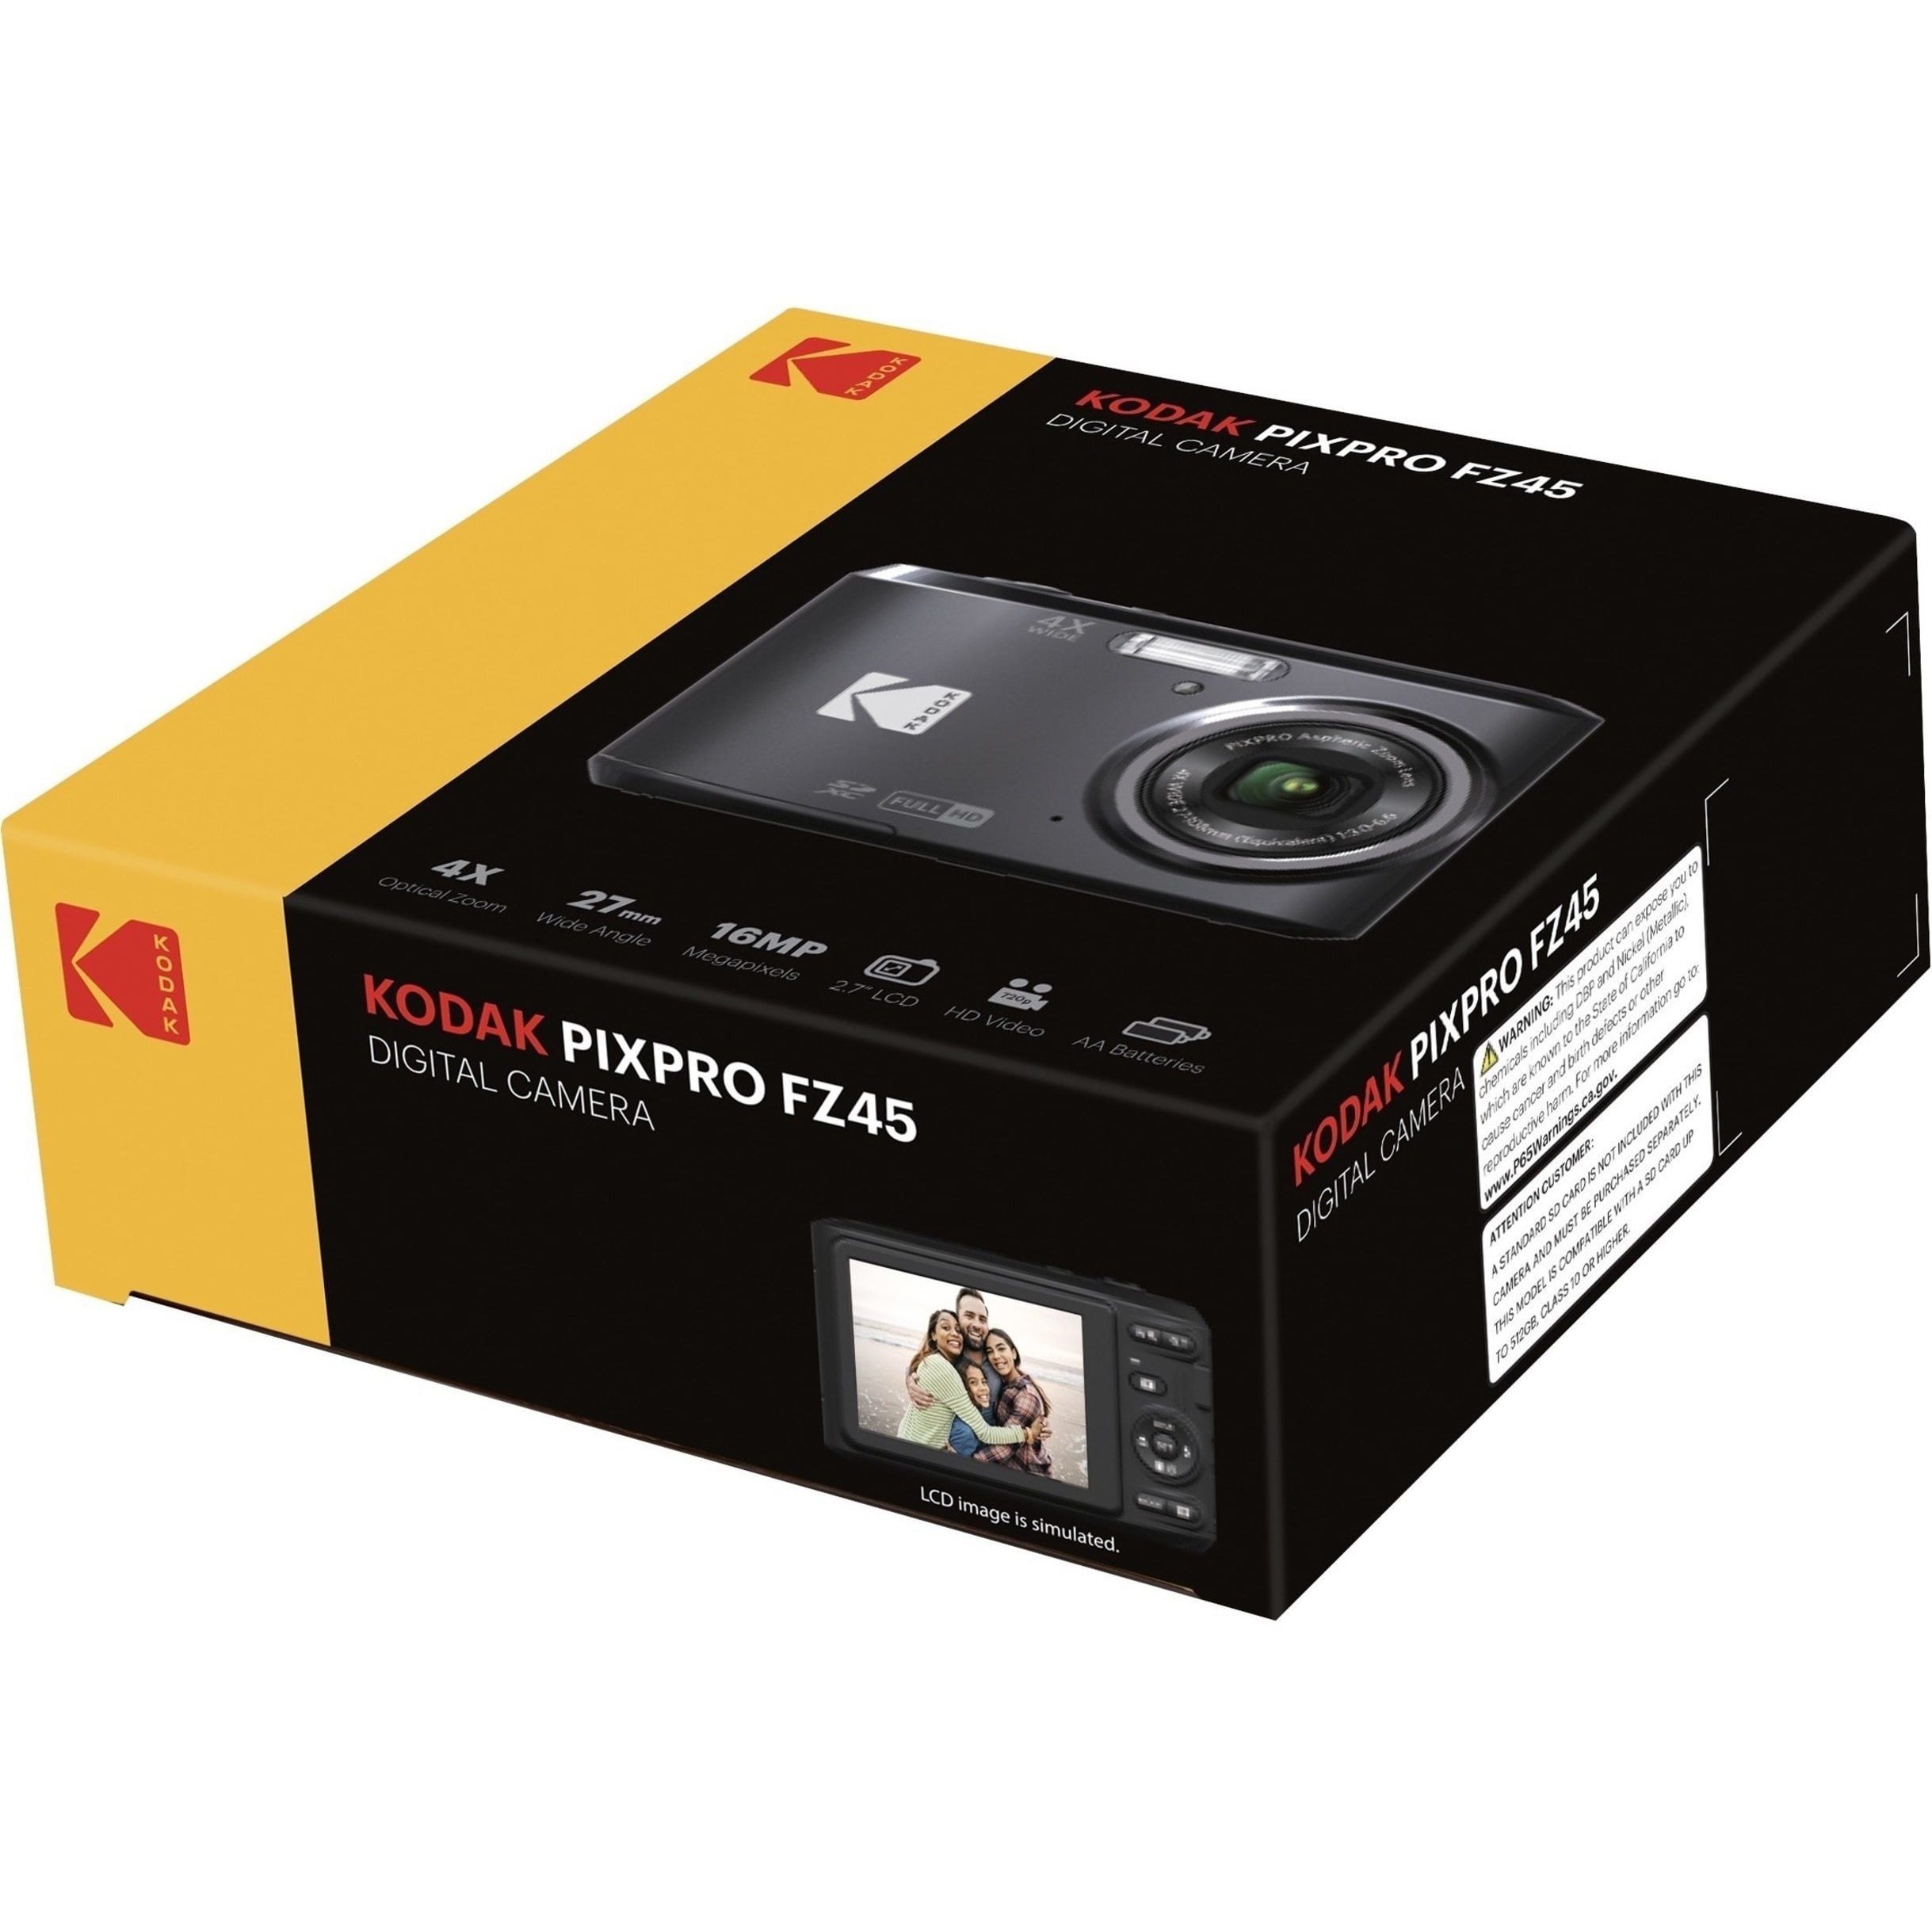 Kodak Pixpro FZ45 Camera (Red) + Extra Battery +LED - 16GB Kit